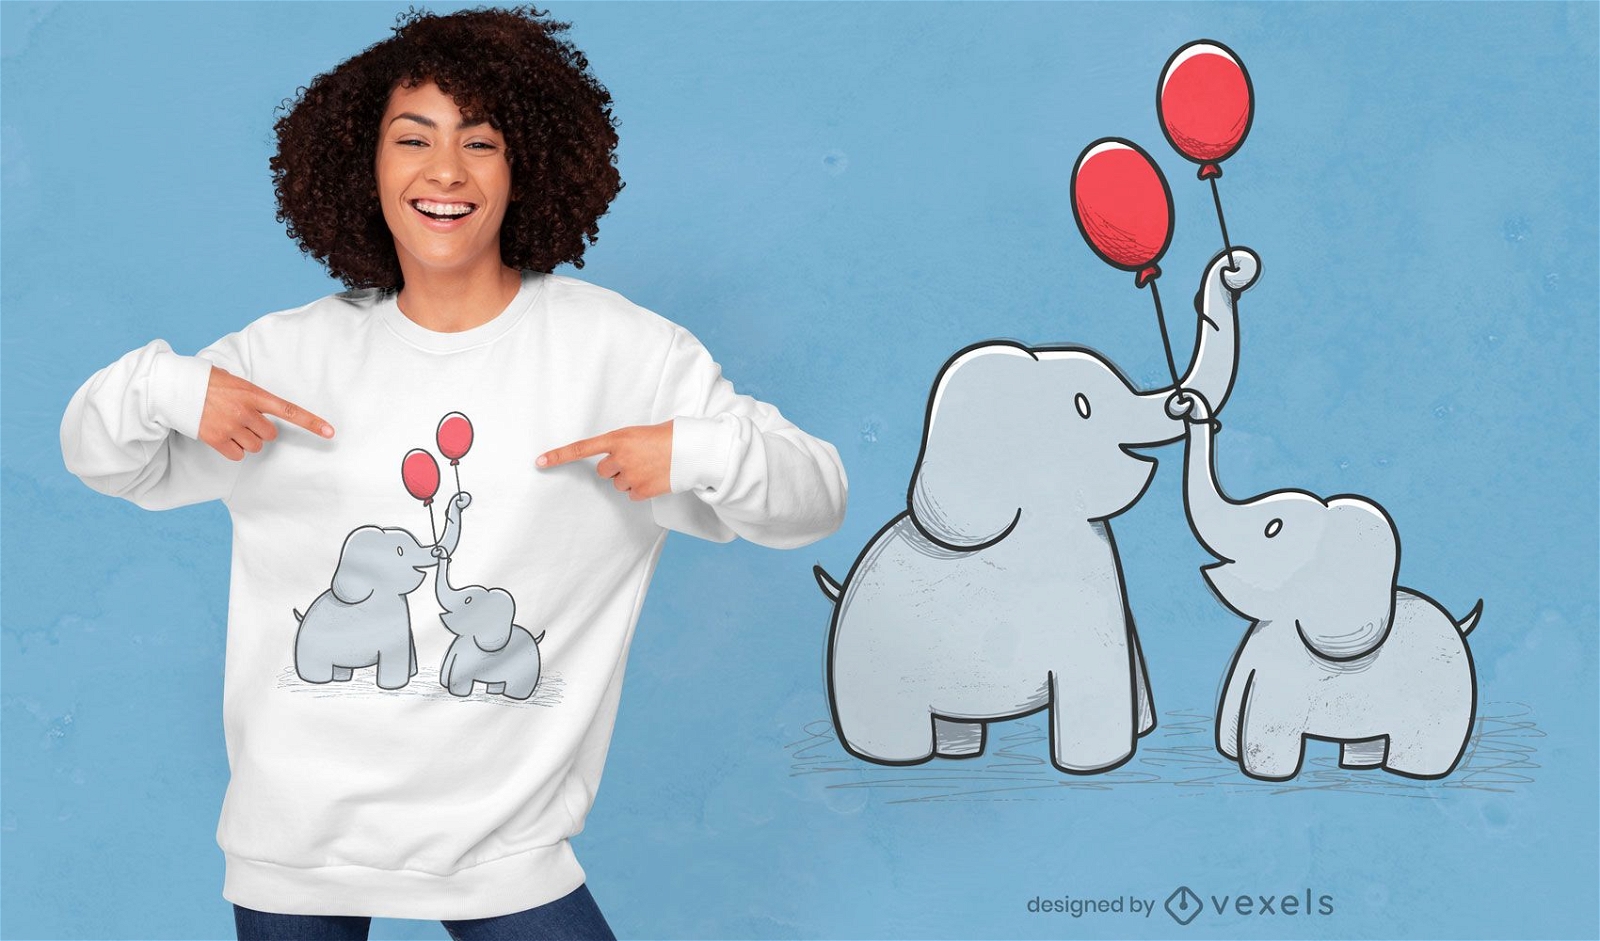 Gl?cklicher Familien-T-Shirt-Entwurf des Elefanten